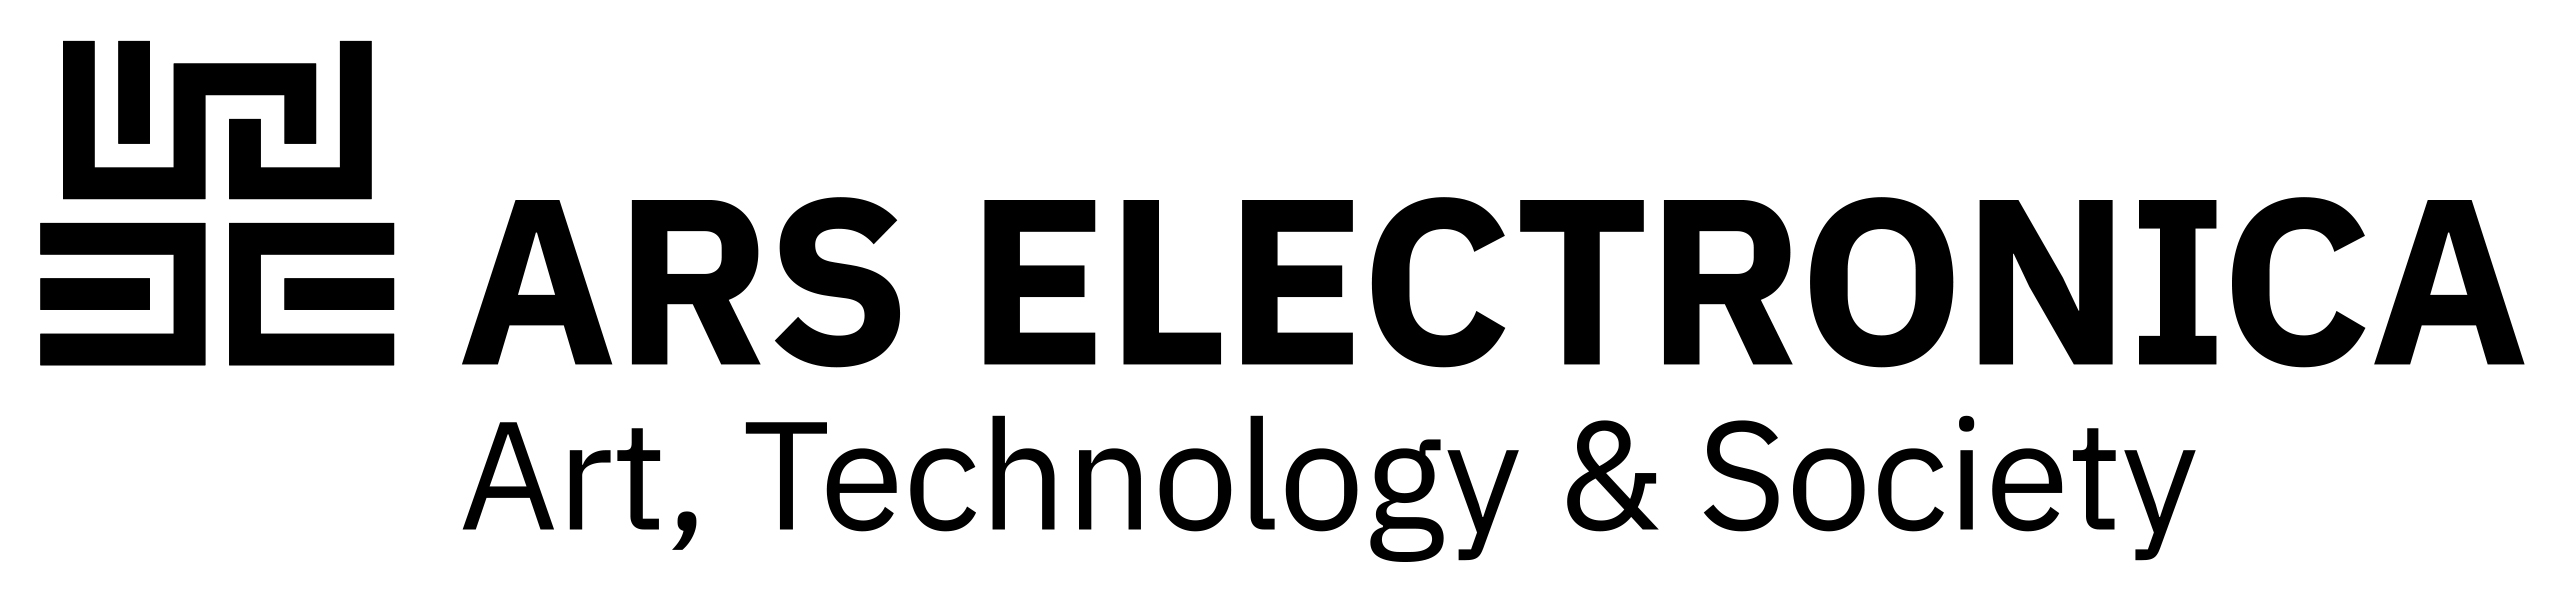 Ars Electronica Logo 